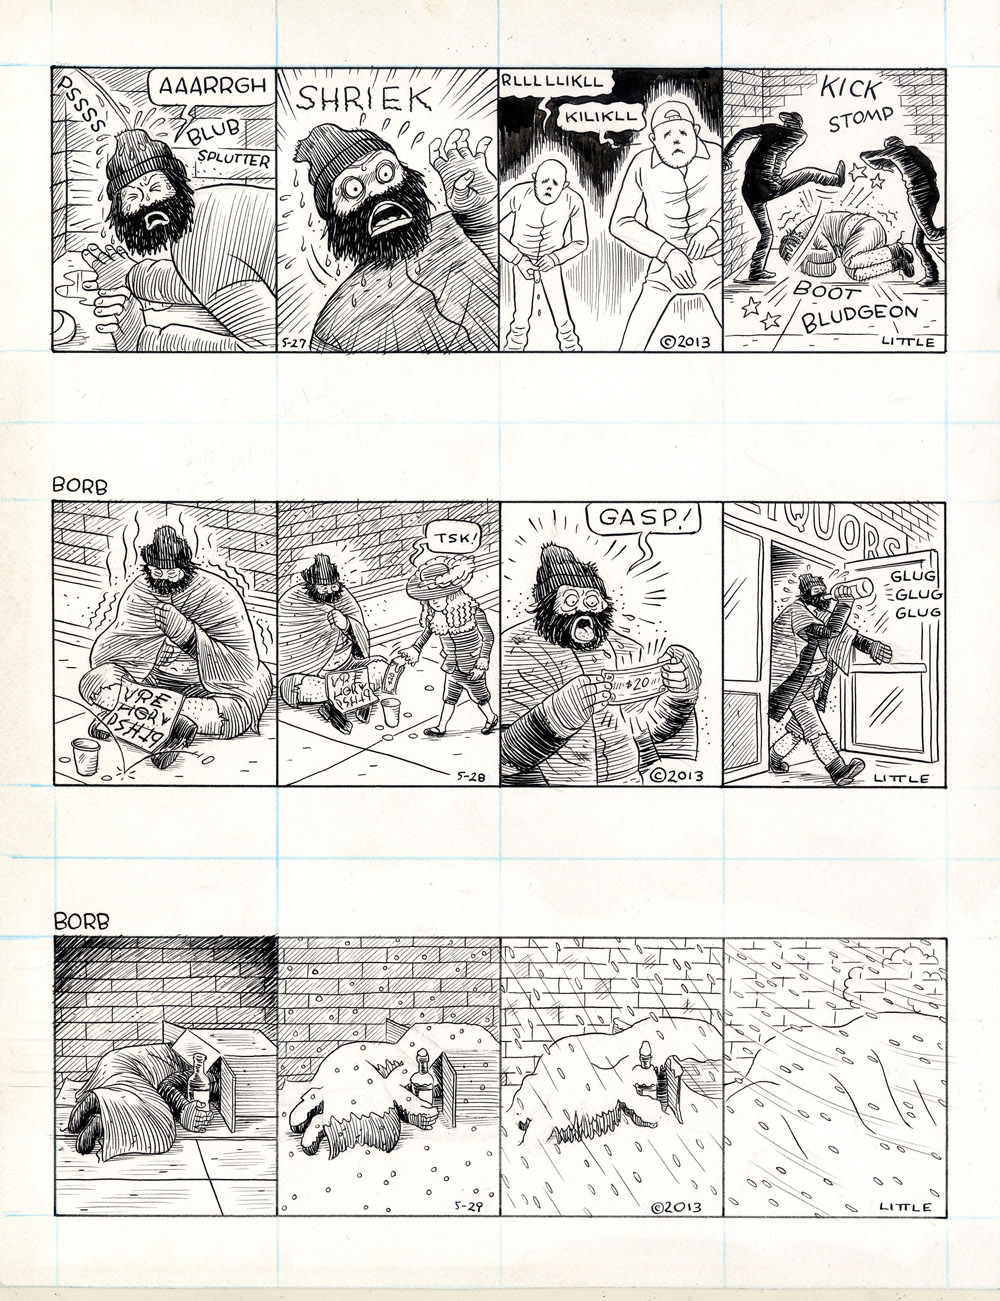 Borb - page 69-71